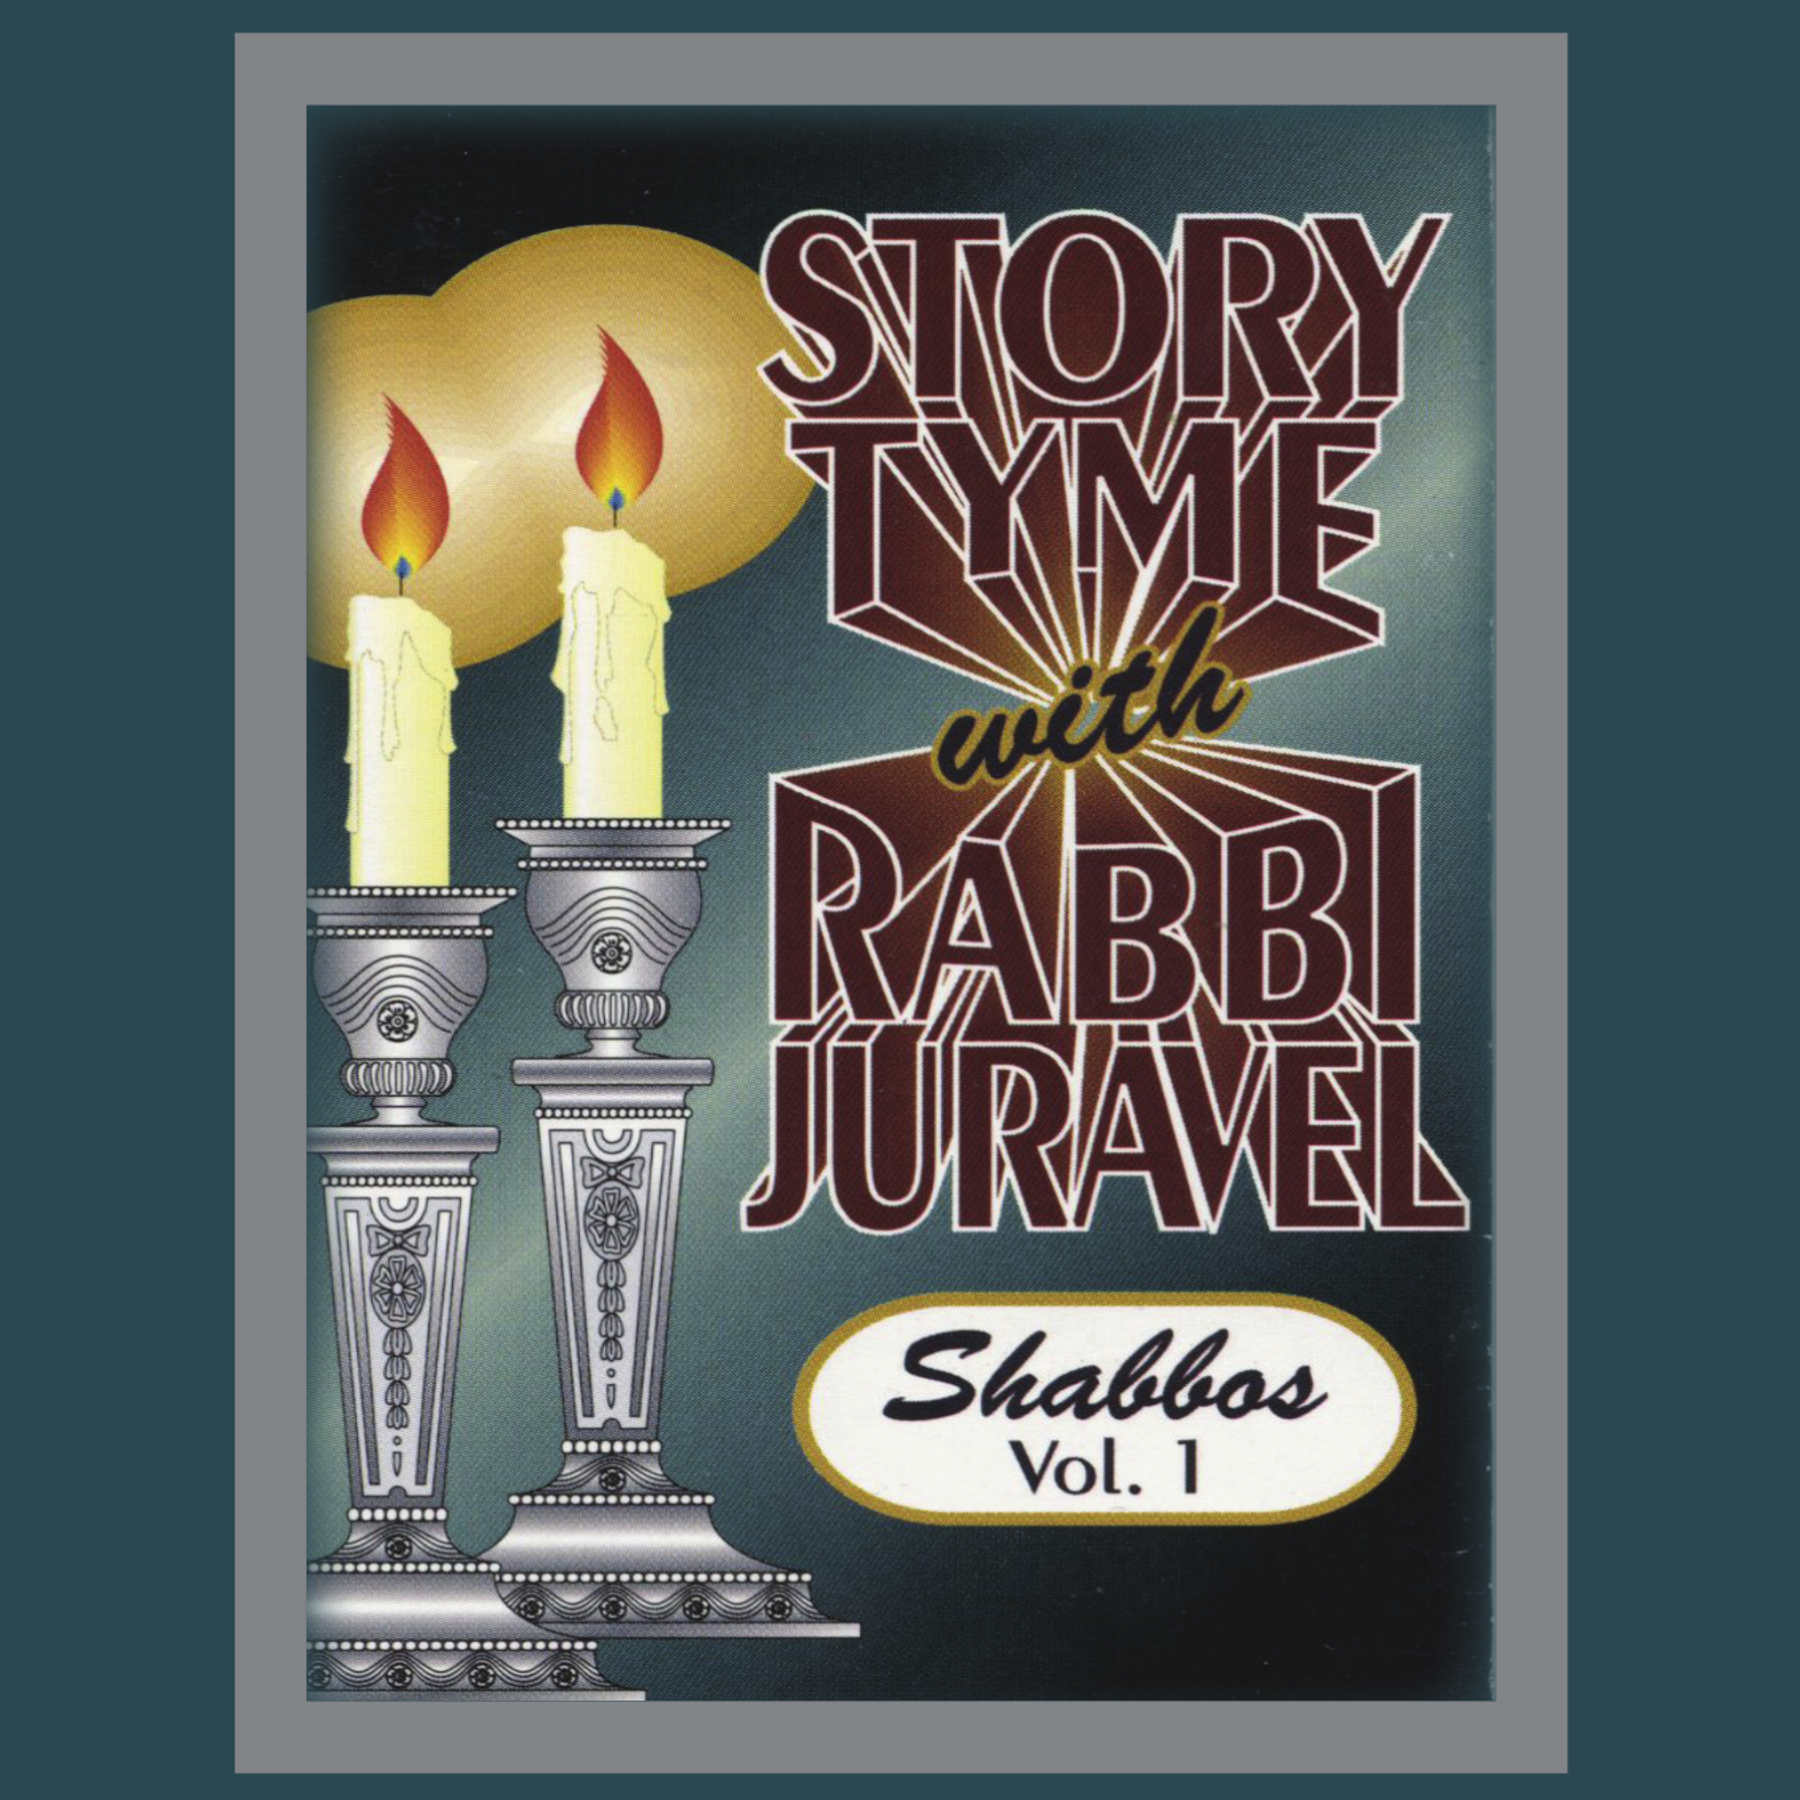 Rabbi Juravel - Shabbos Vol. 1